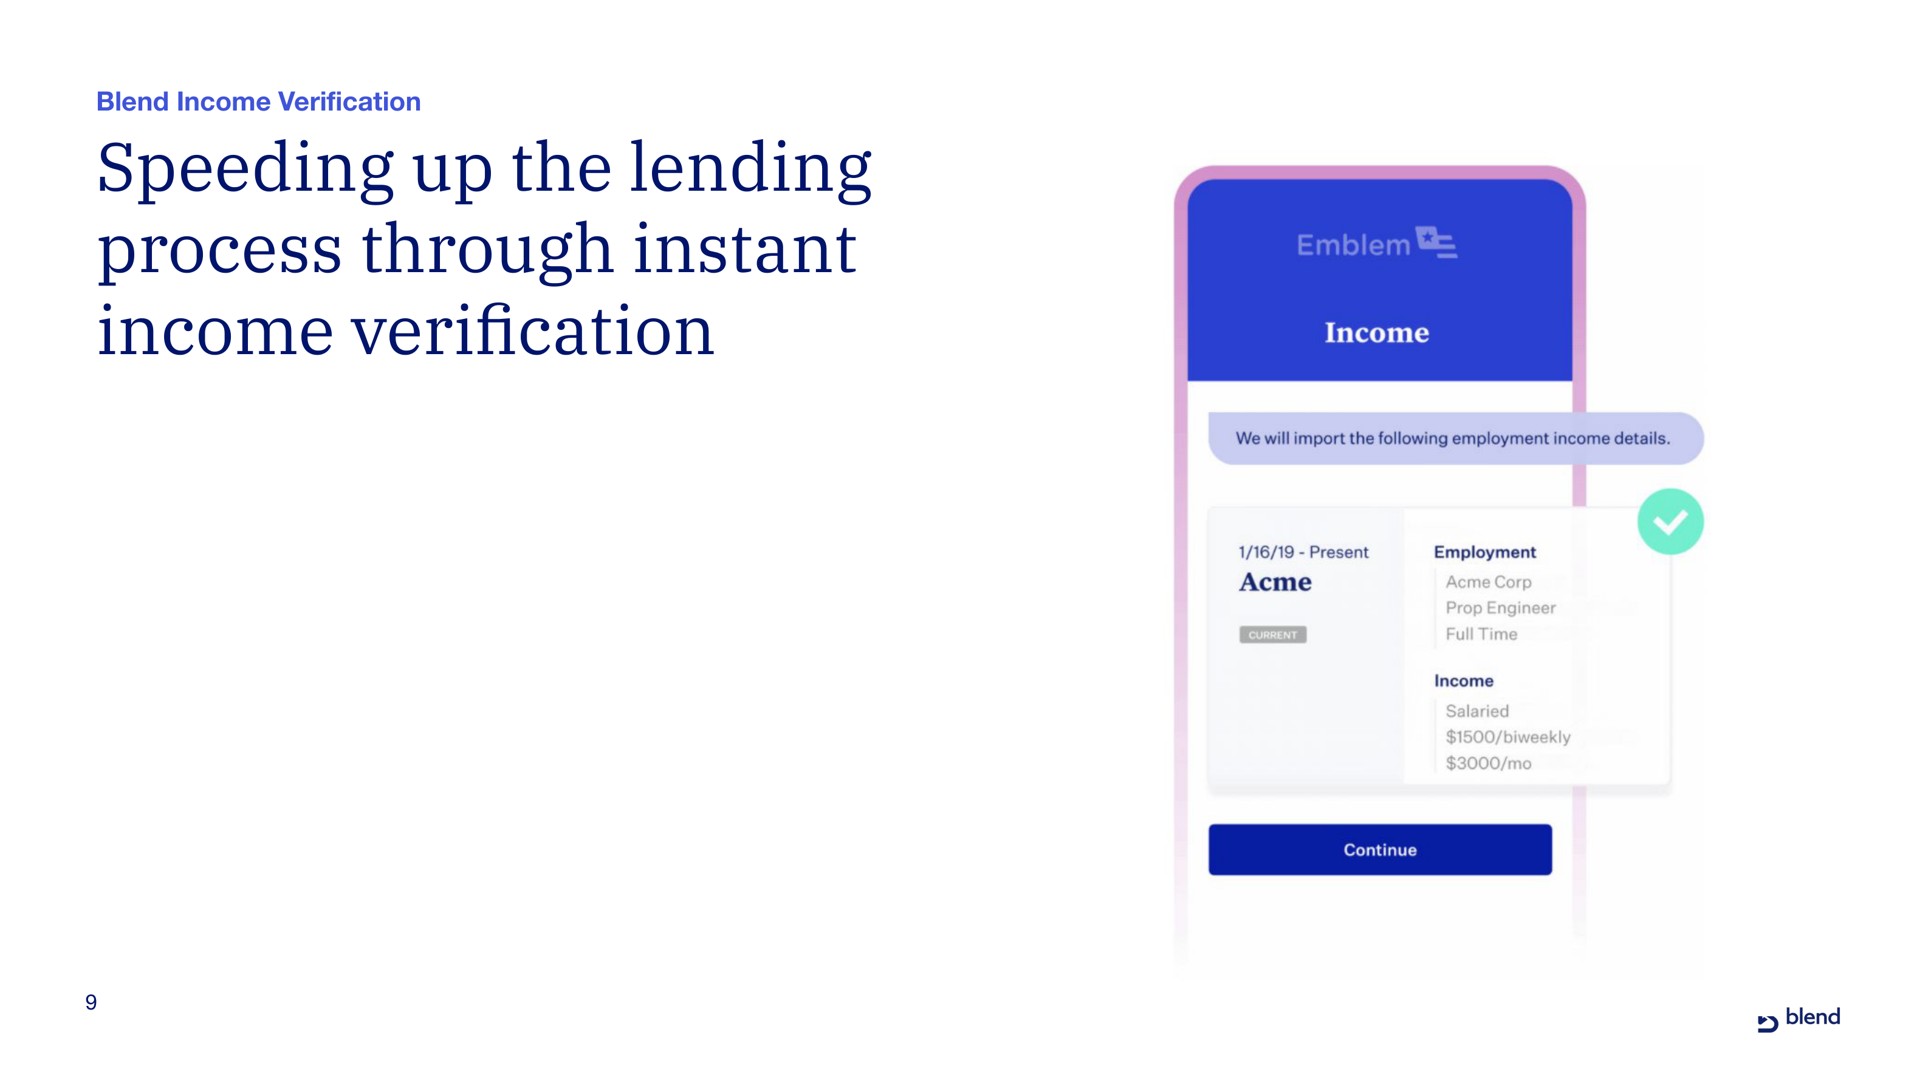 speeding up the lending process through instant income veri cation verification | Blend